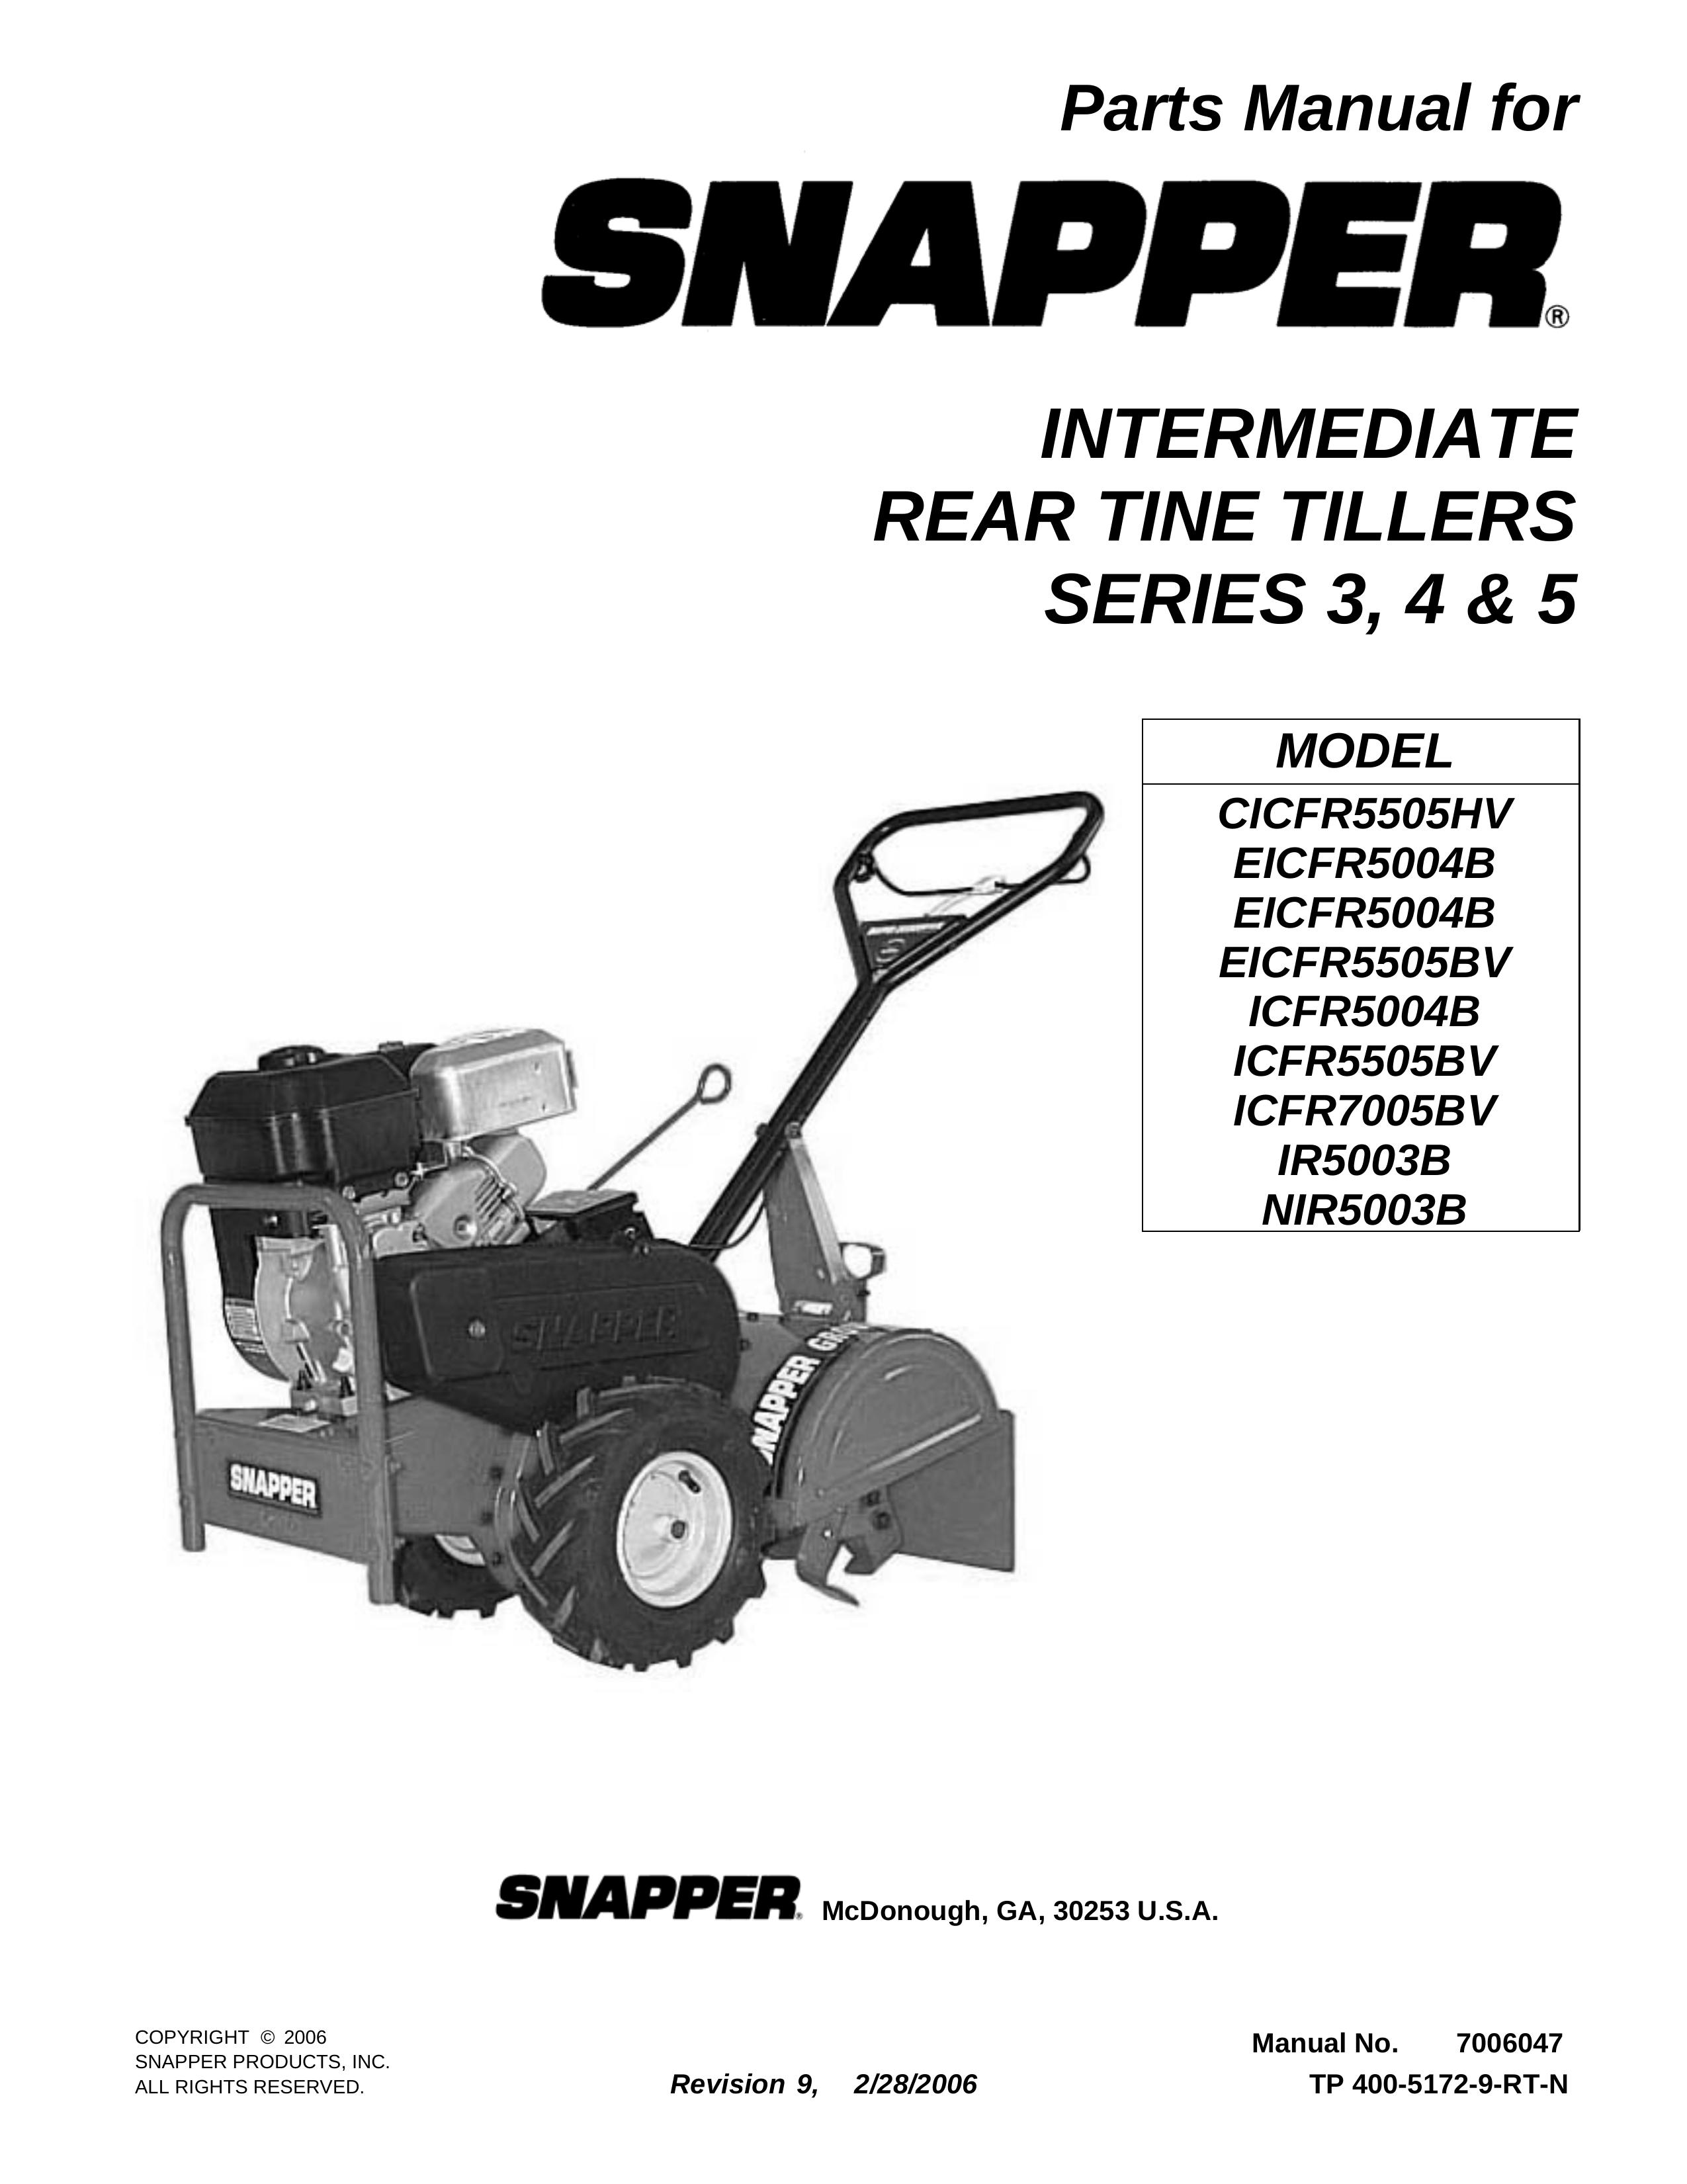 Snapper ICFR5505BV Tiller User Manual